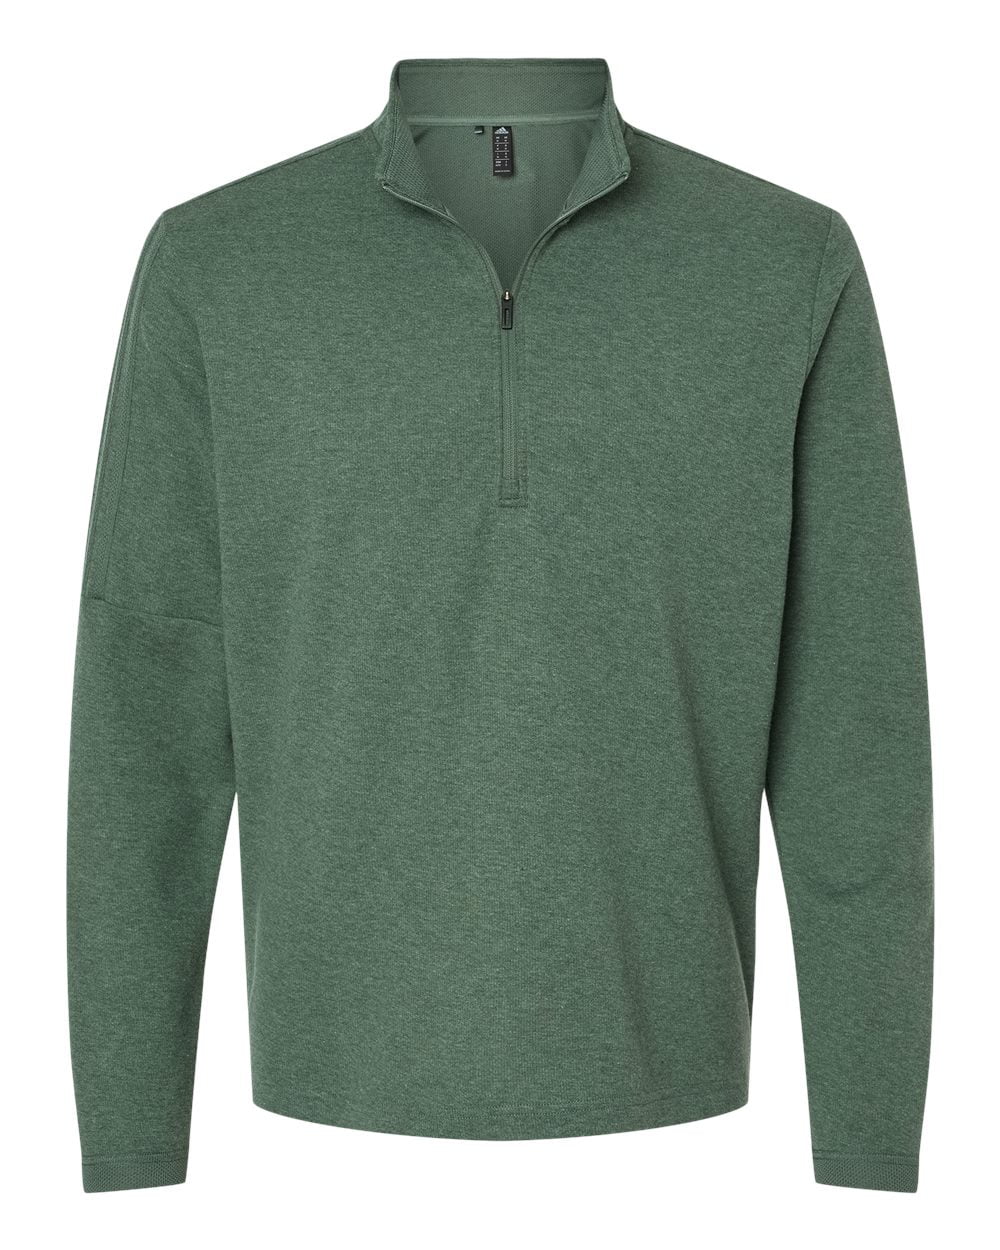 Adidas - 3-Stripes Quarter-Zip Sweater - A554 - Green Oxide